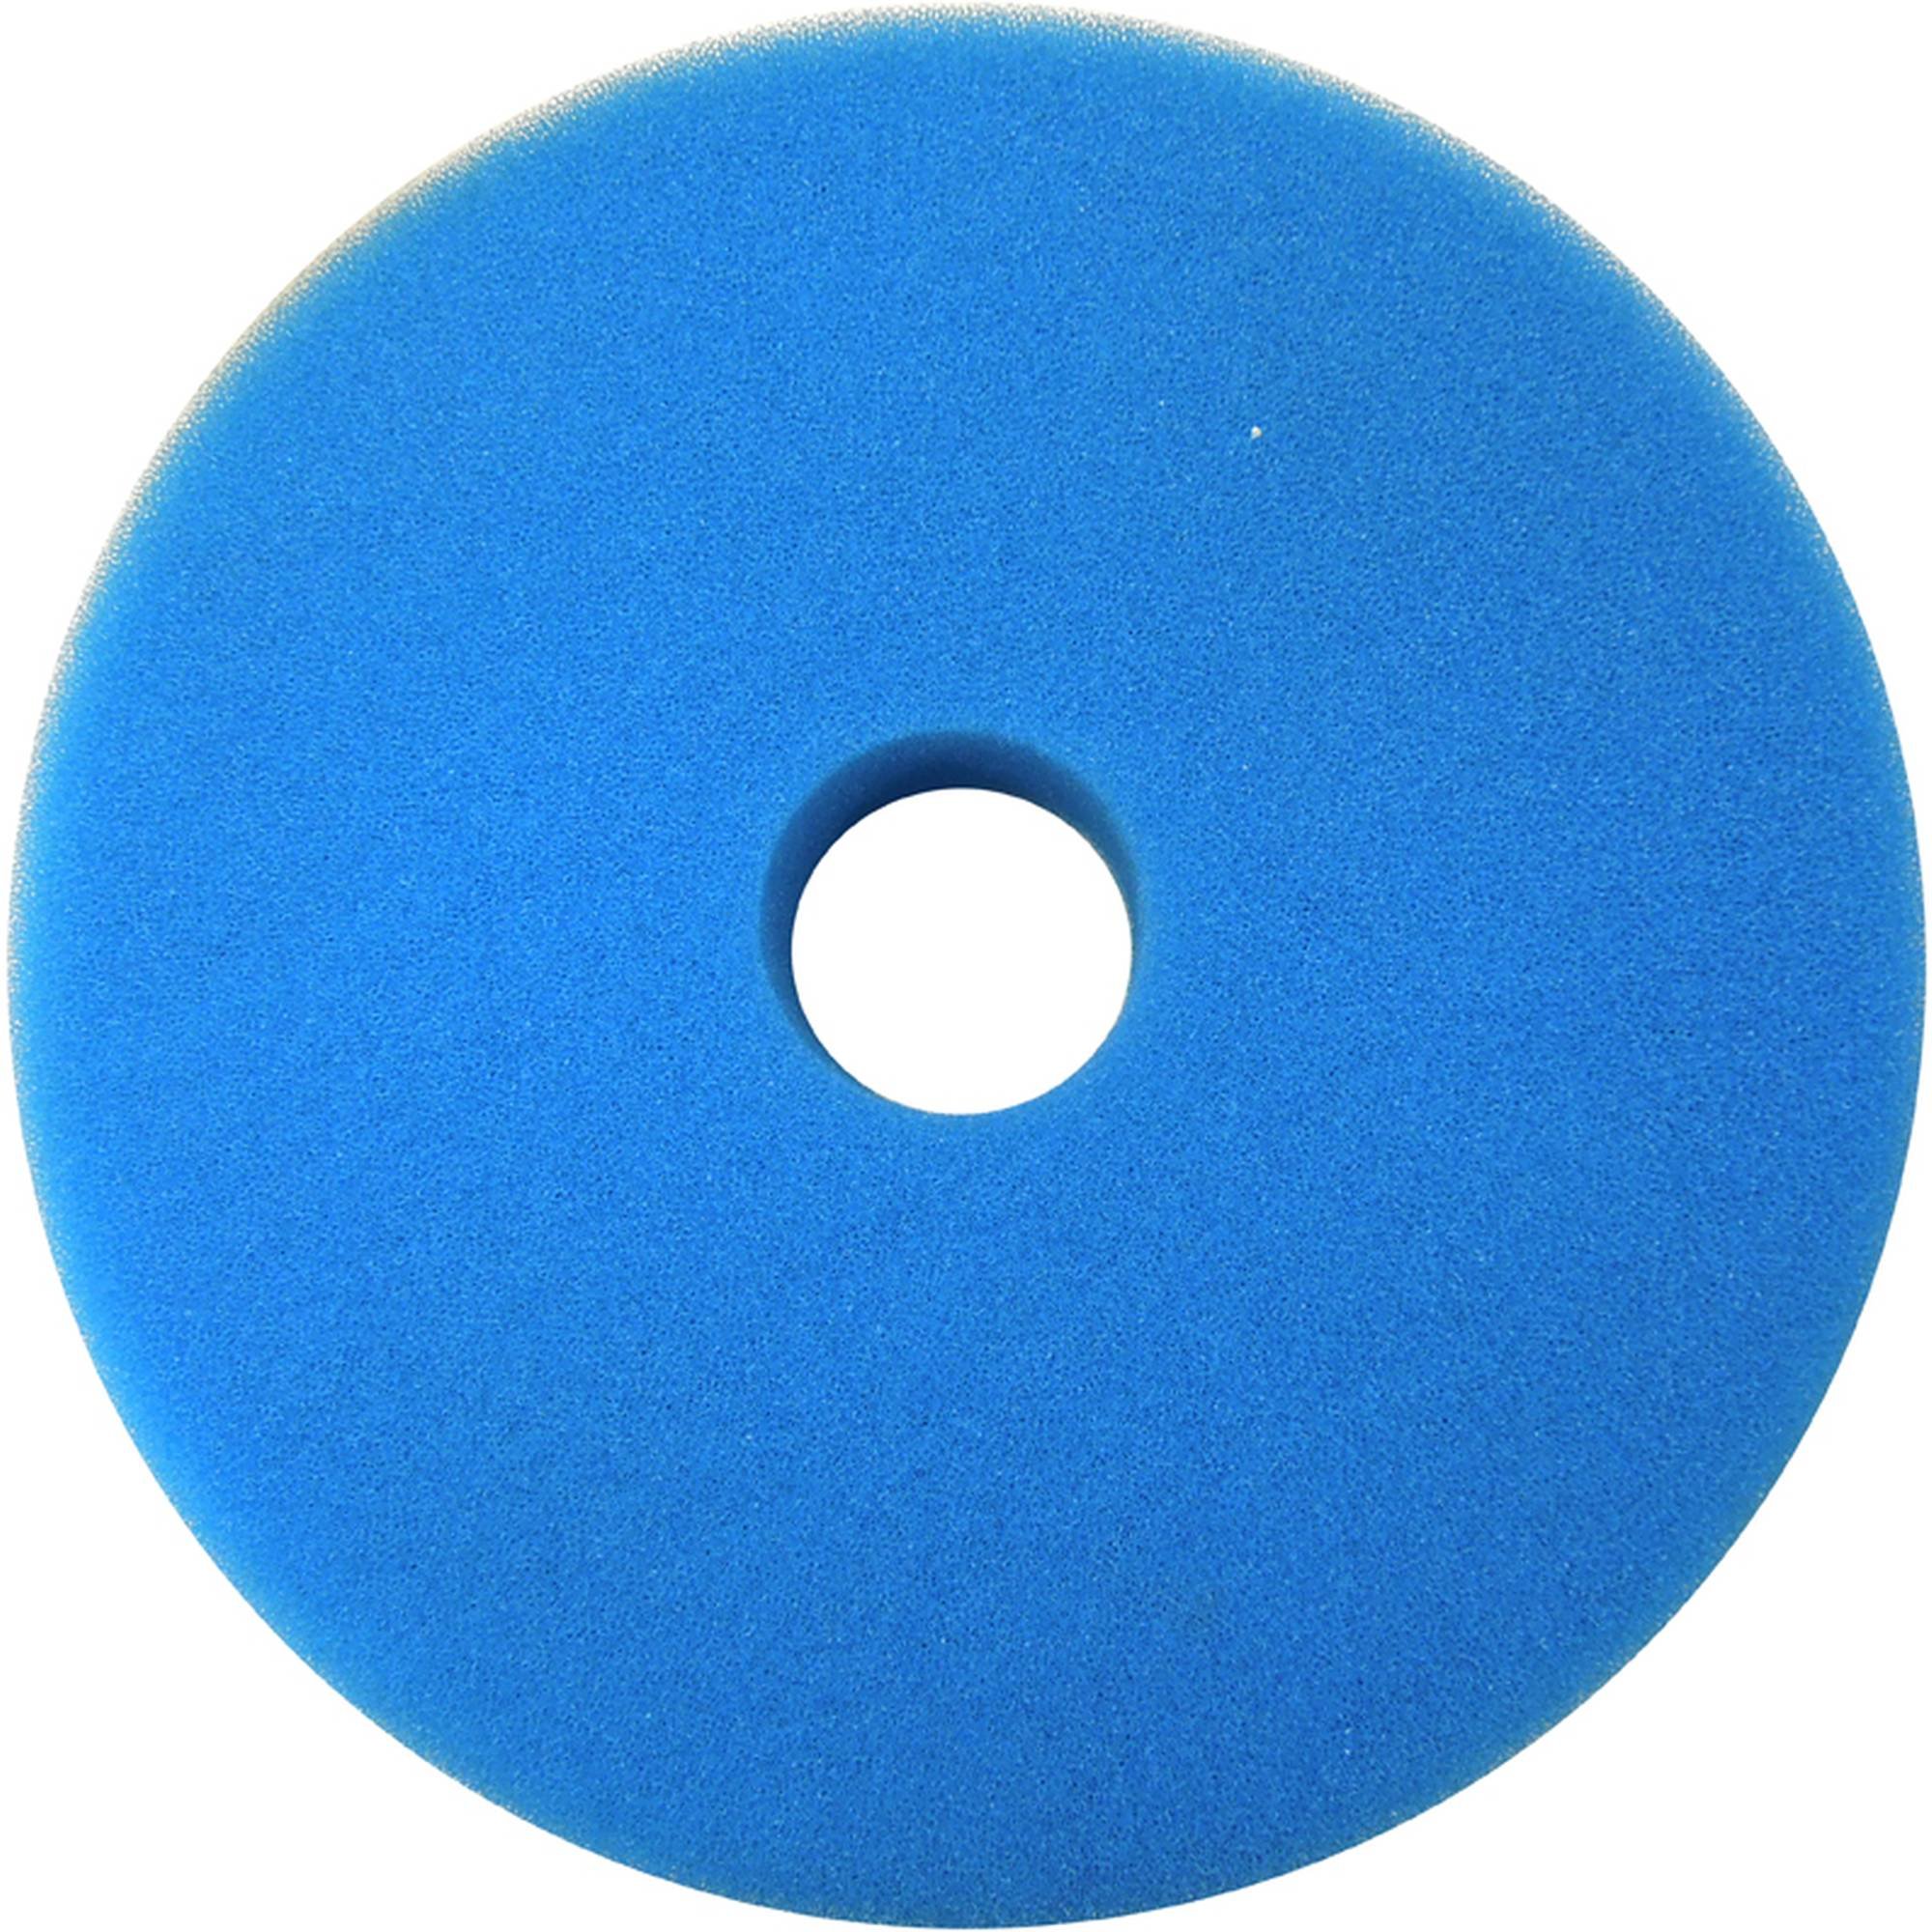 Filtersponge smooth/blue FPU10000-00